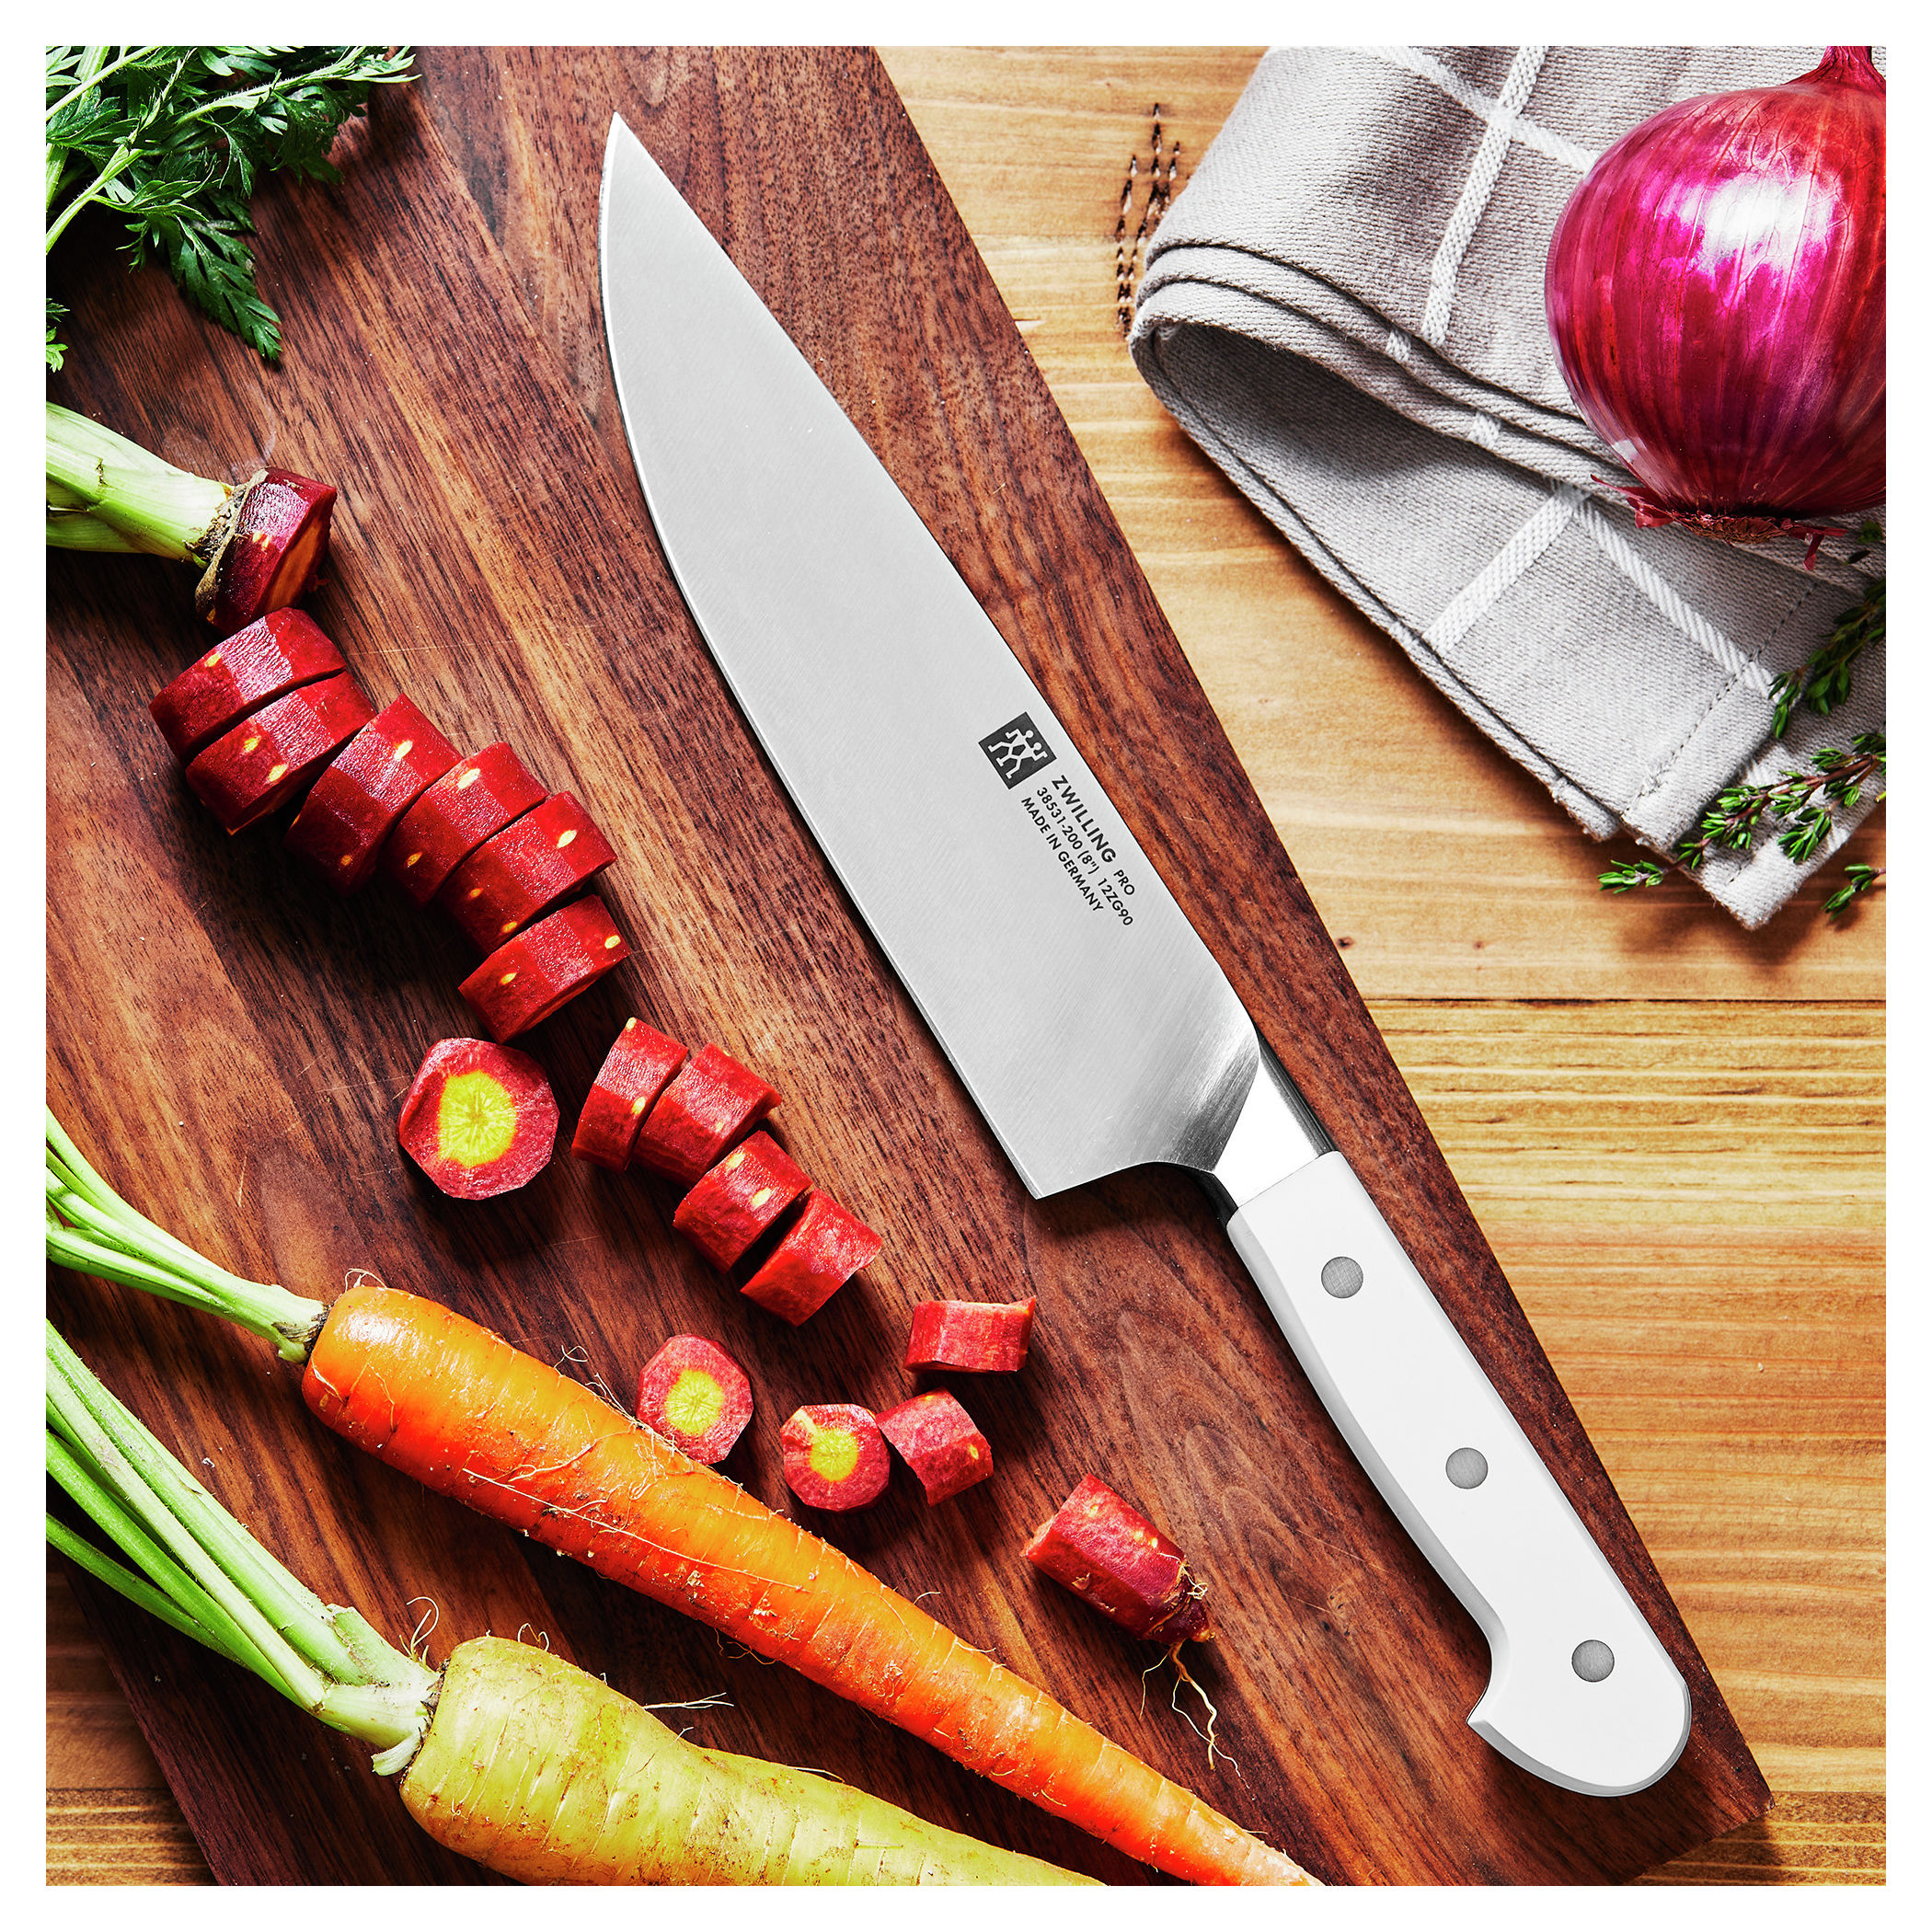 Buy ZWILLING Pro le blanc Steak knife